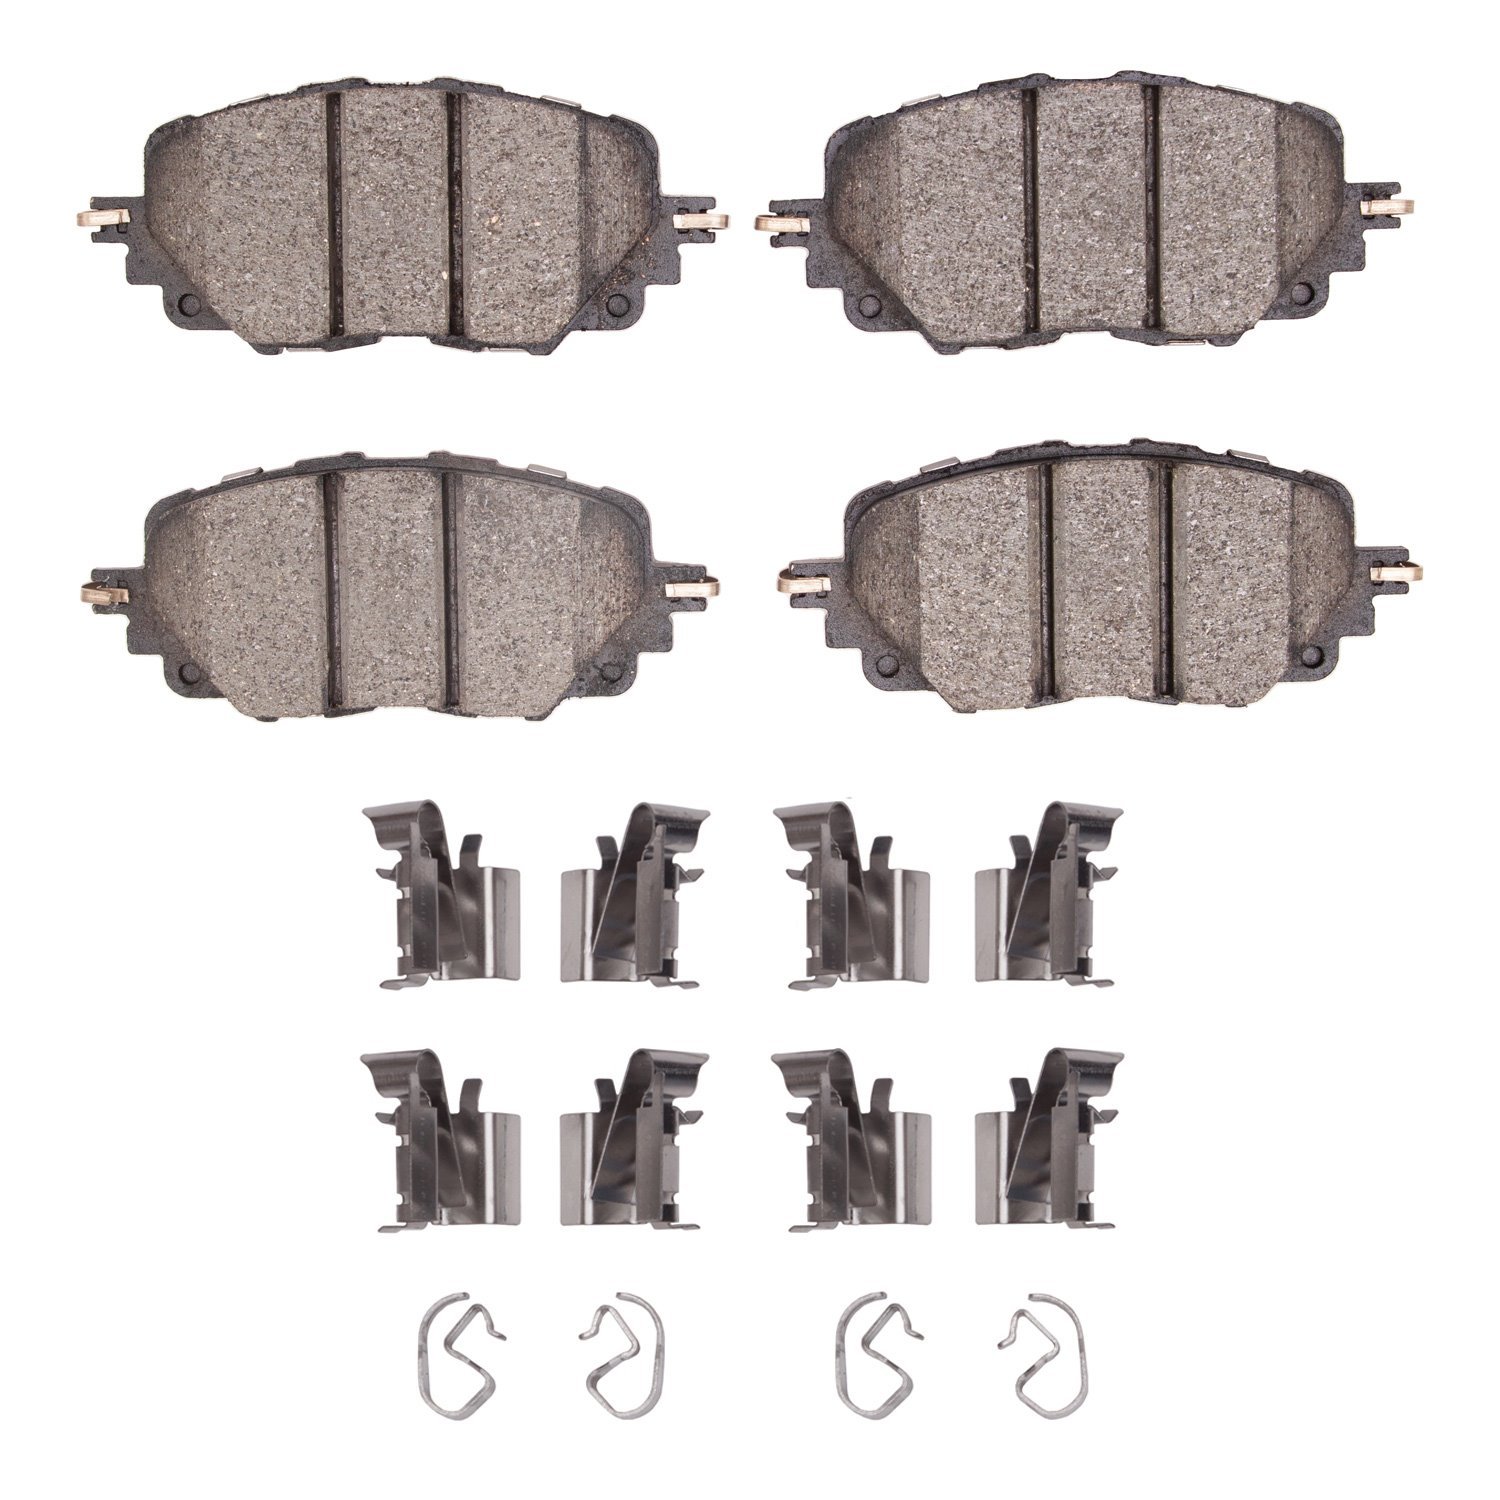 1310-1903-01 3000-Series Ceramic Brake Pads & Hardware Kit, Fits Select Multiple Makes/Models, Position: Front